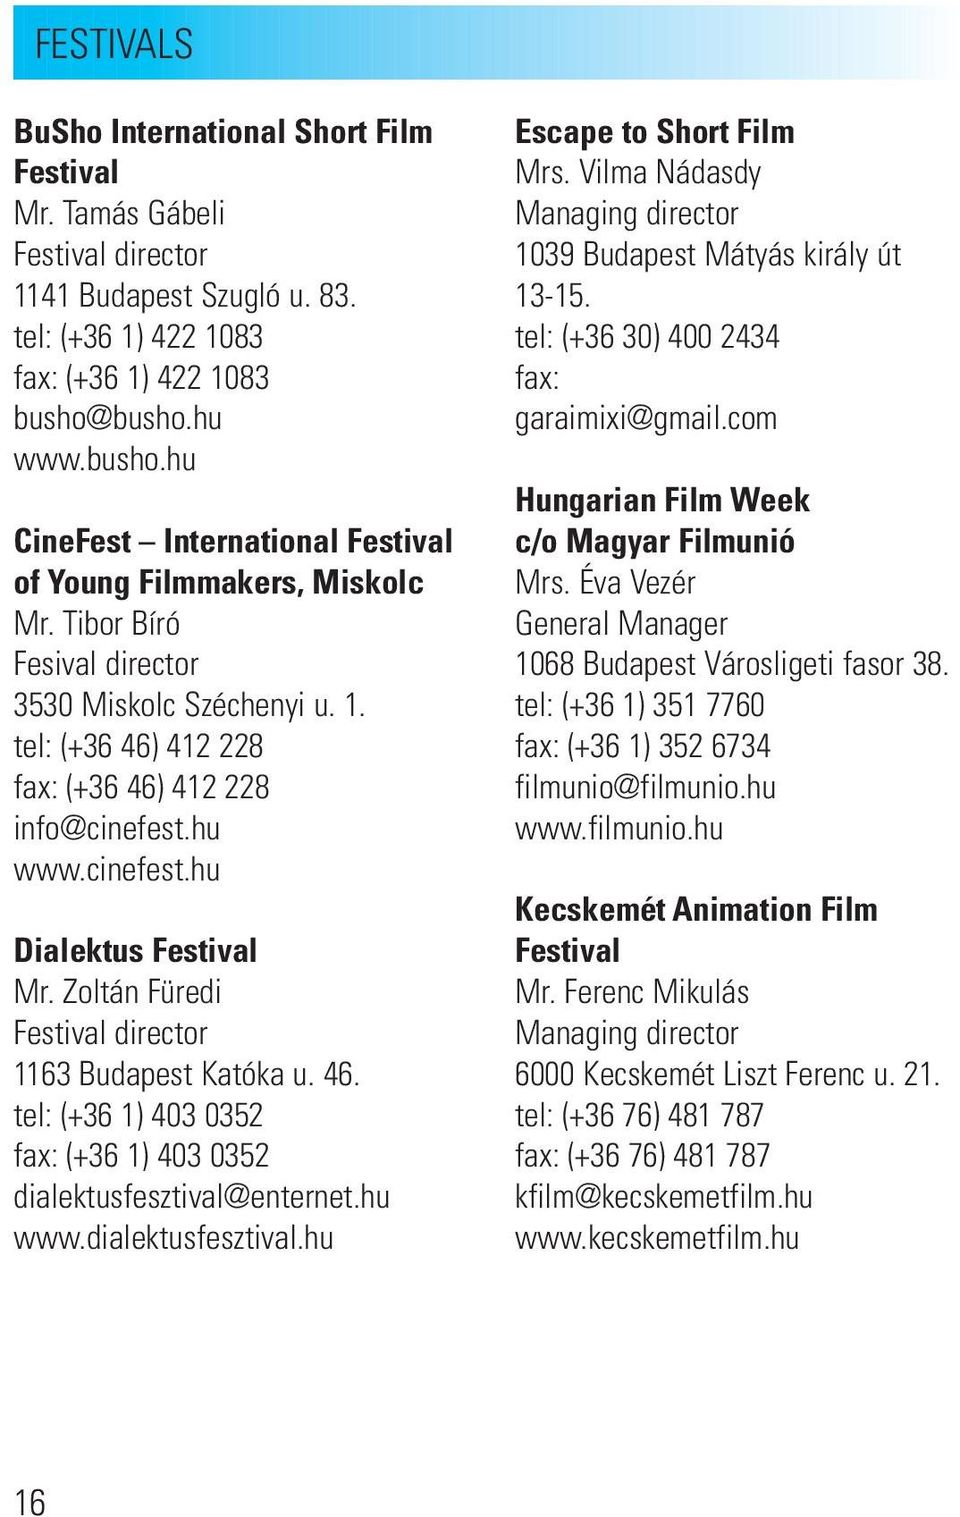 tel: (+36 46) 412 228 fax: (+36 46) 412 228 info@cinefest.hu www.cinefest.hu Dialektus Festival Mr. Zoltán Füredi Festival director 1163 Budapest Katóka u. 46. tel: (+36 1) 403 0352 fax: (+36 1) 403 0352 dialektusfesztival@enternet.